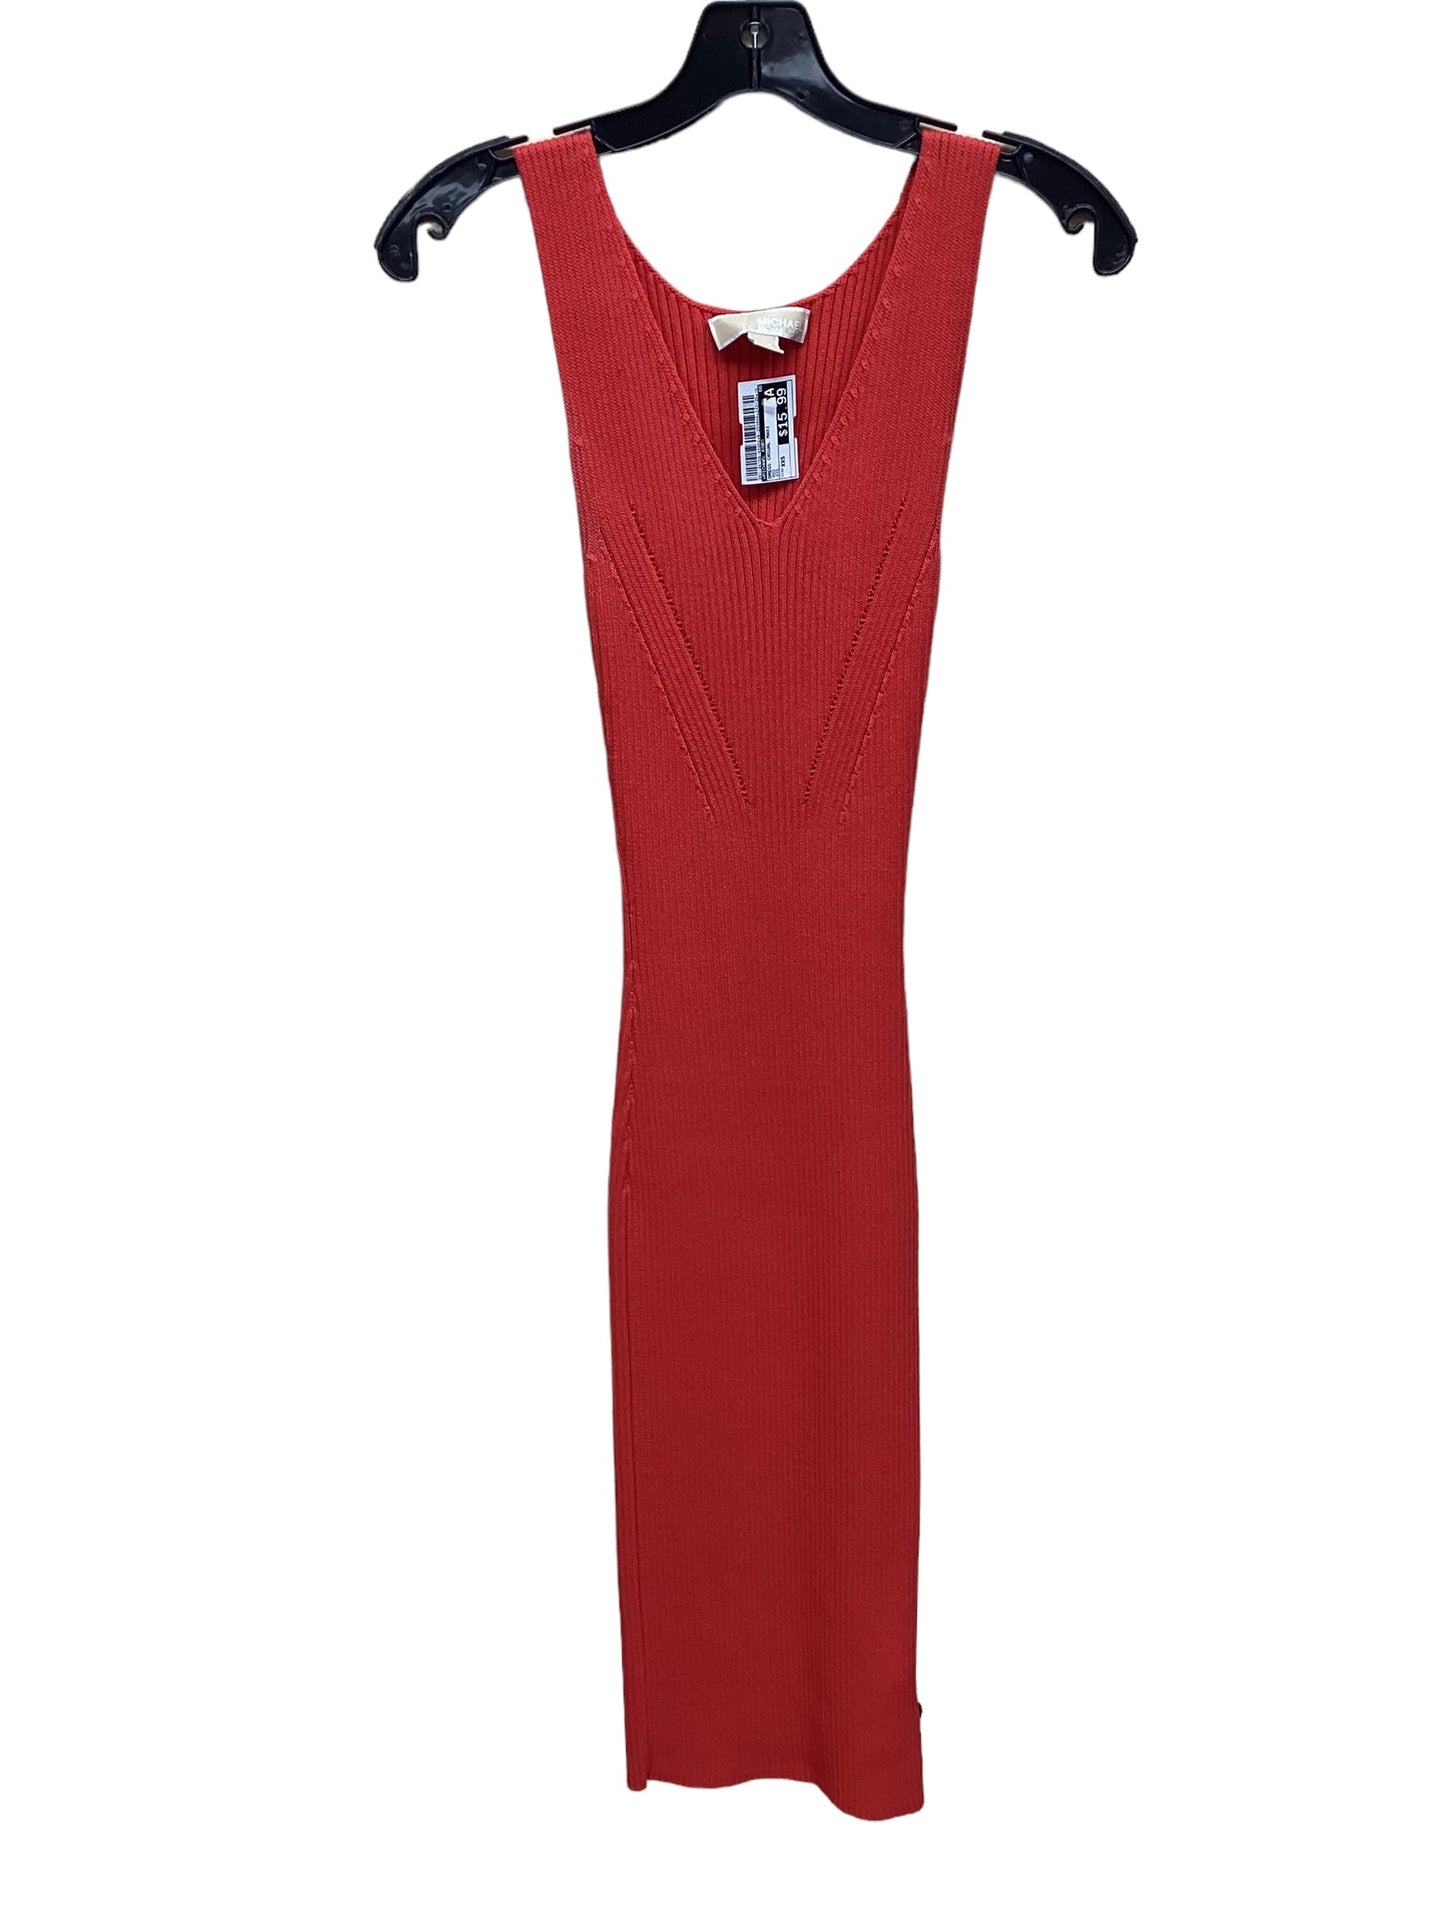 Dress Casual Maxi By Michael Kors  Size: Xxs